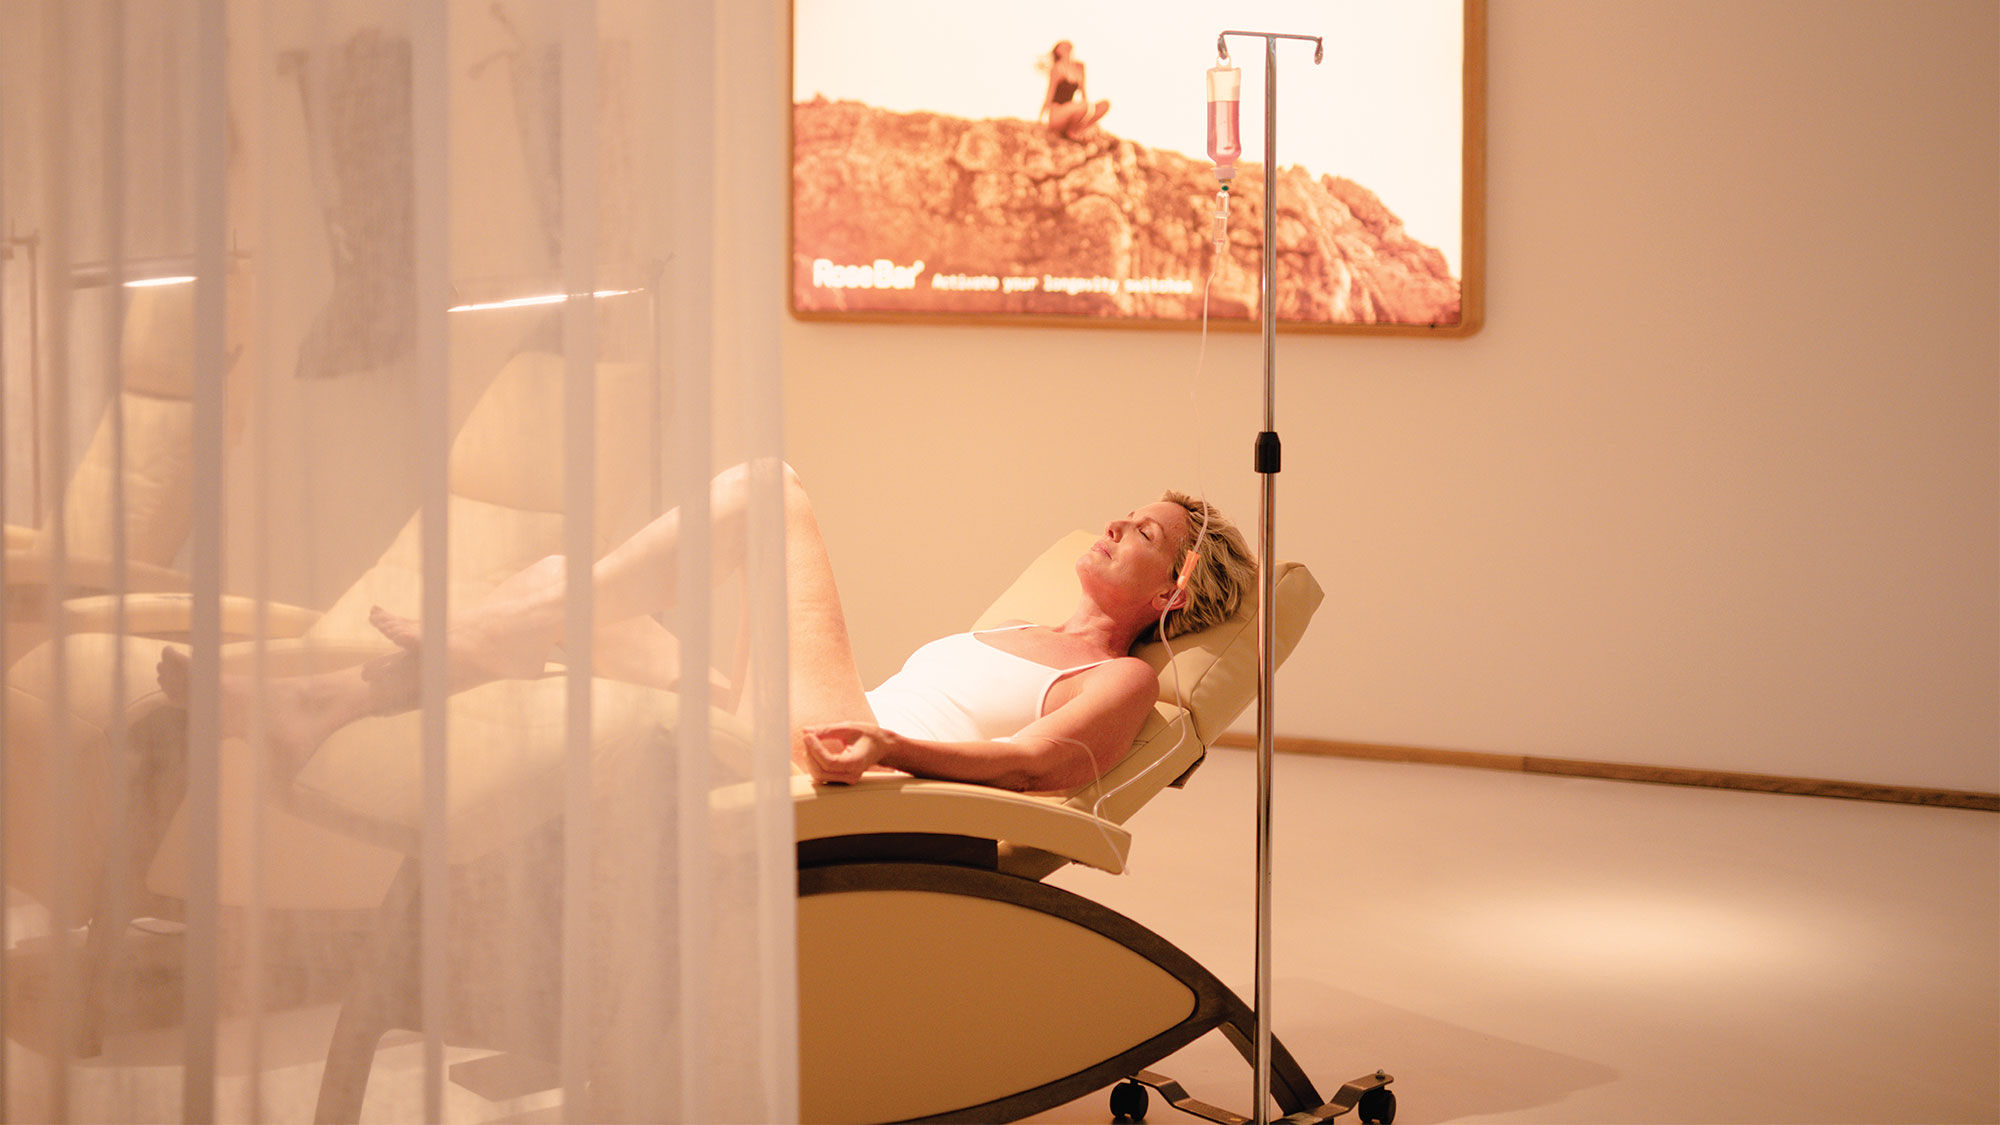 A guest receives IV therapy at the Six Senses Ibiza's RoseBar "longevity club."